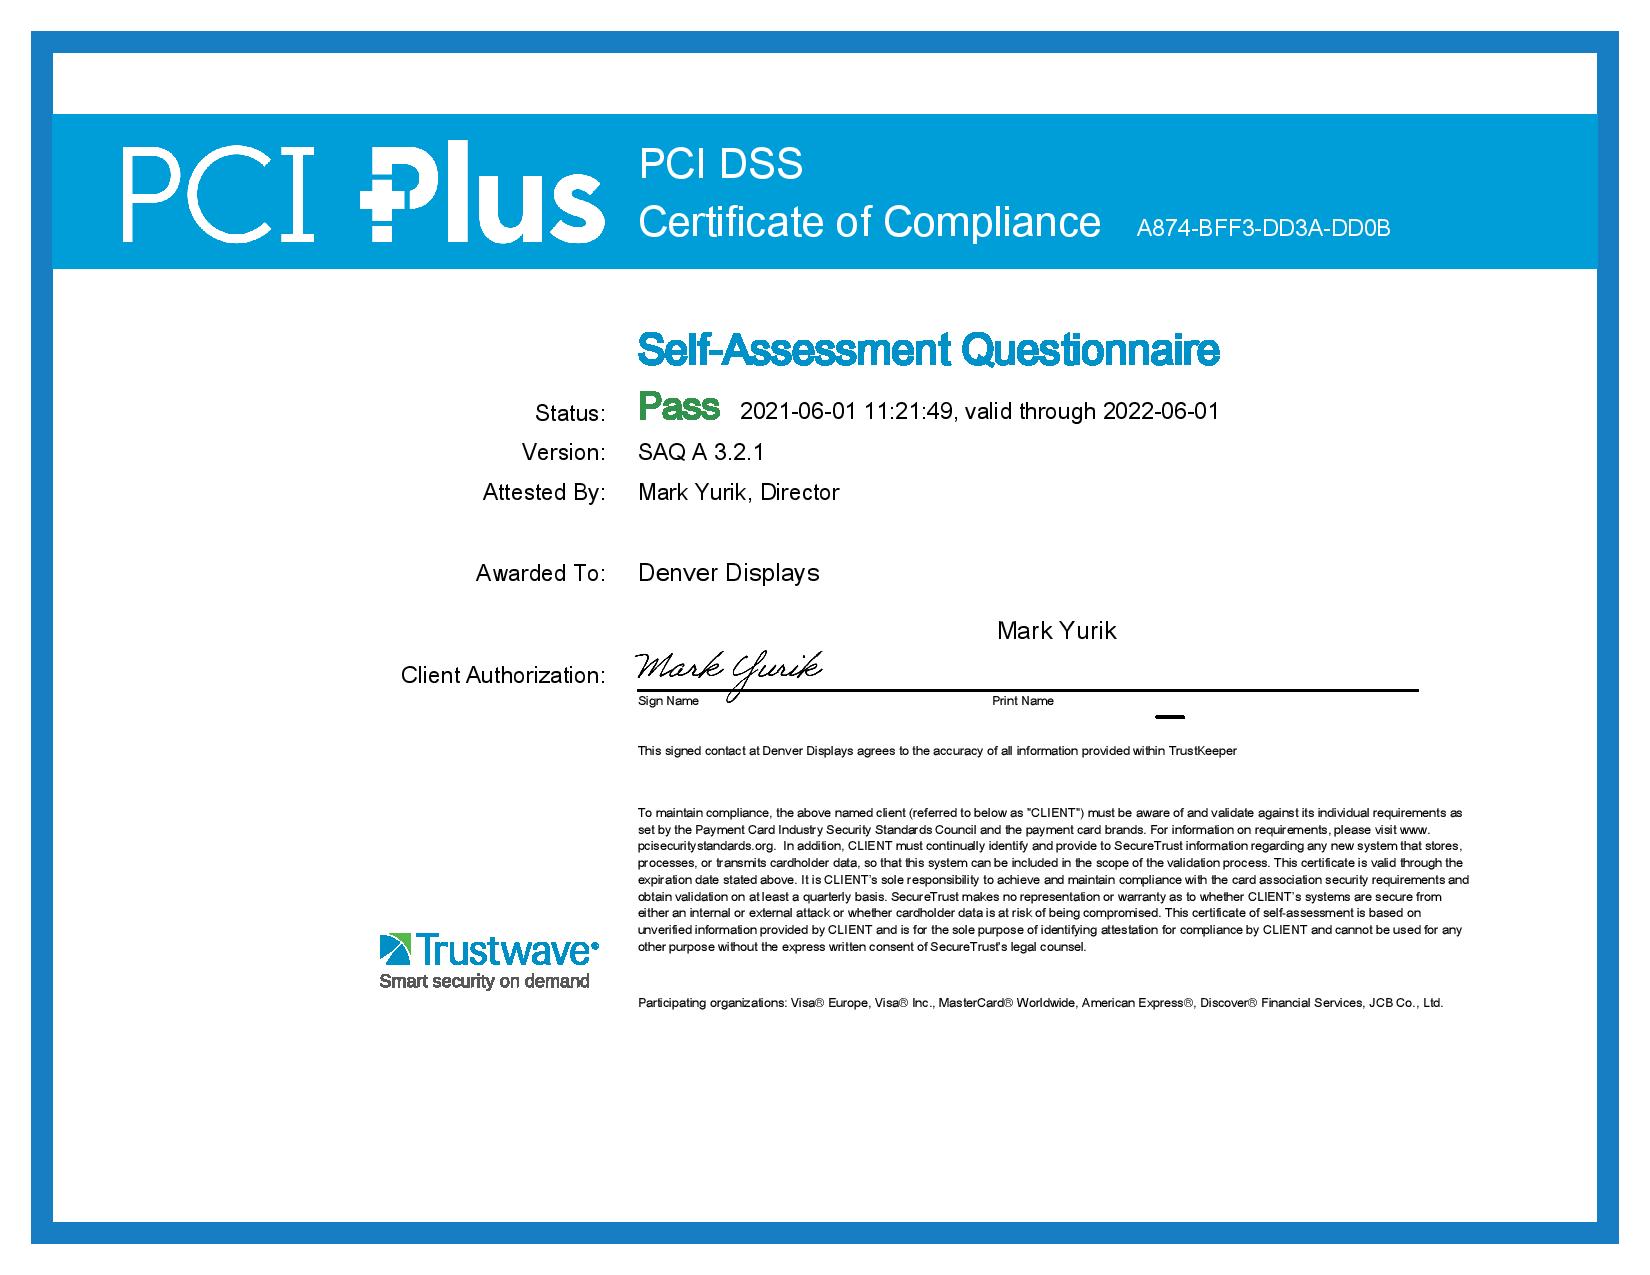 PCI DSS Certificate